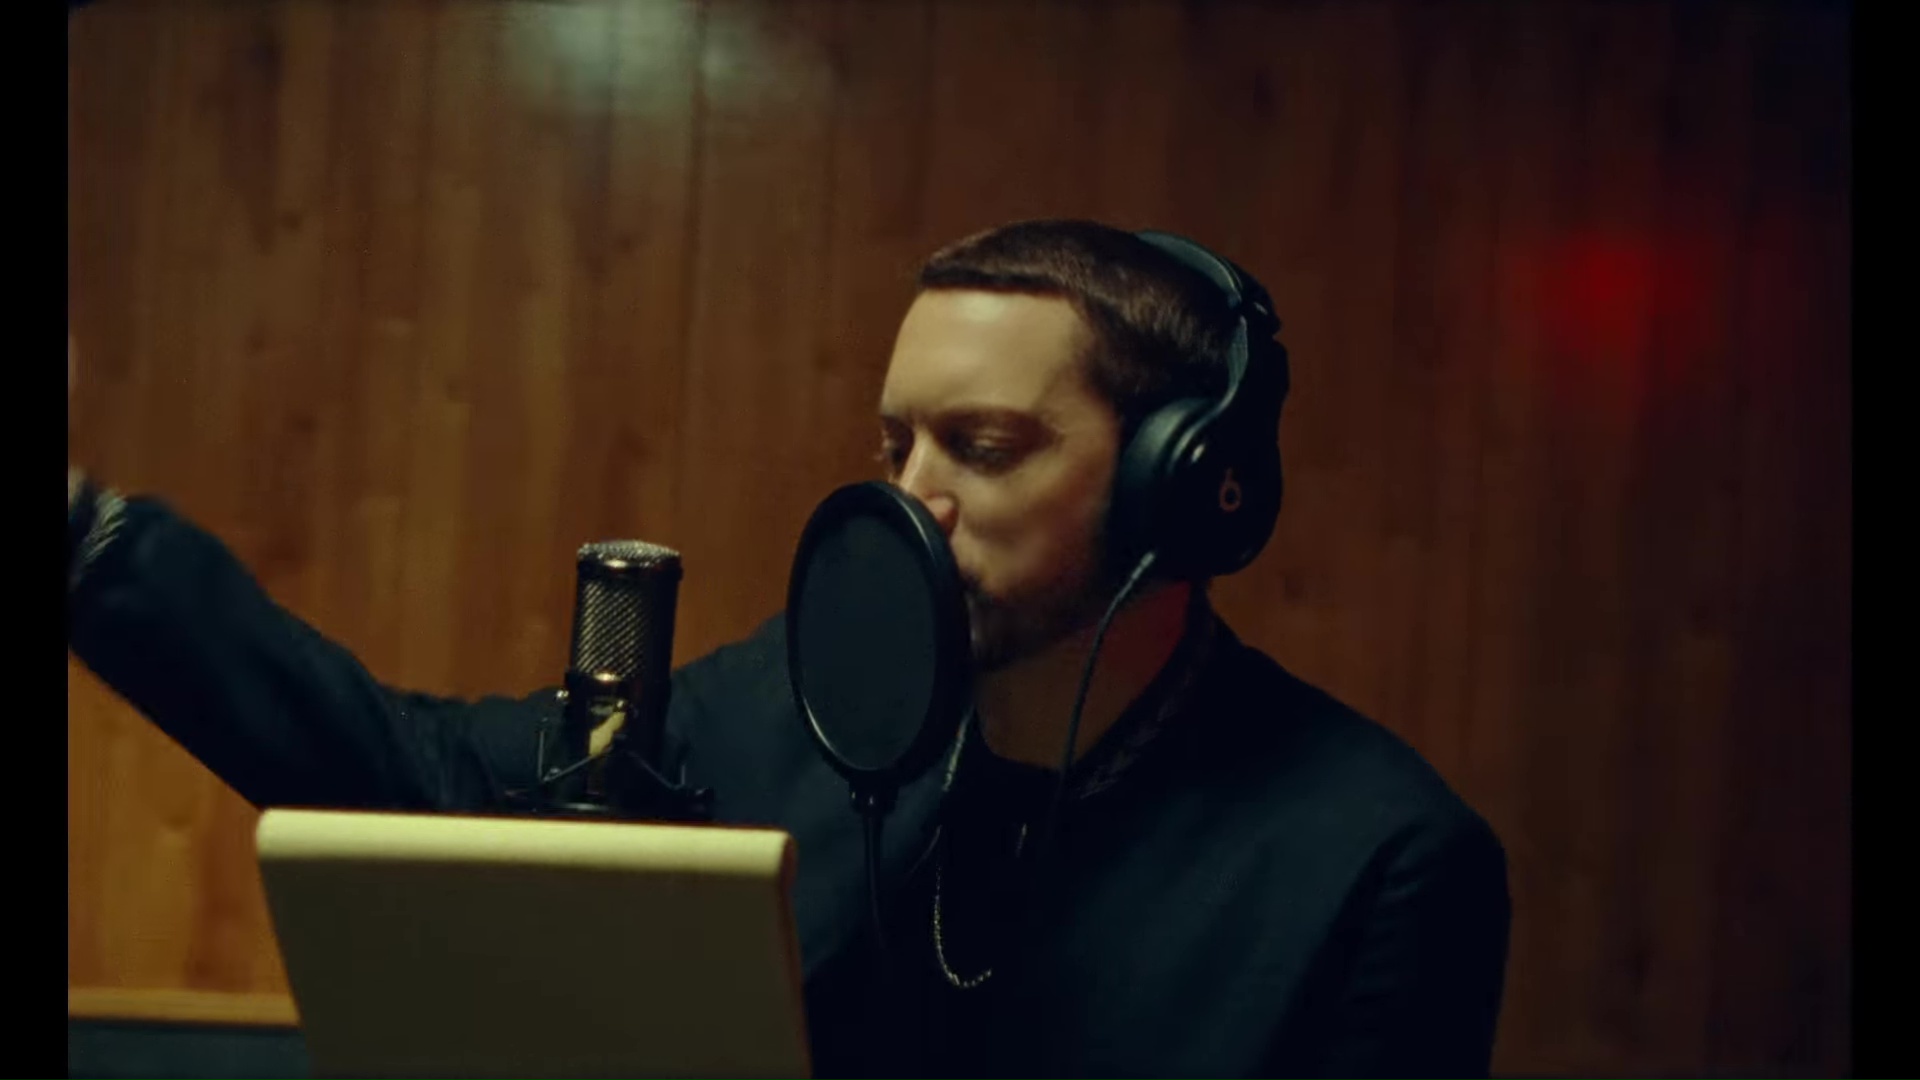 Beats Headphones in River by Eminem ft. Ed Sheeran (2018) Official Music Video